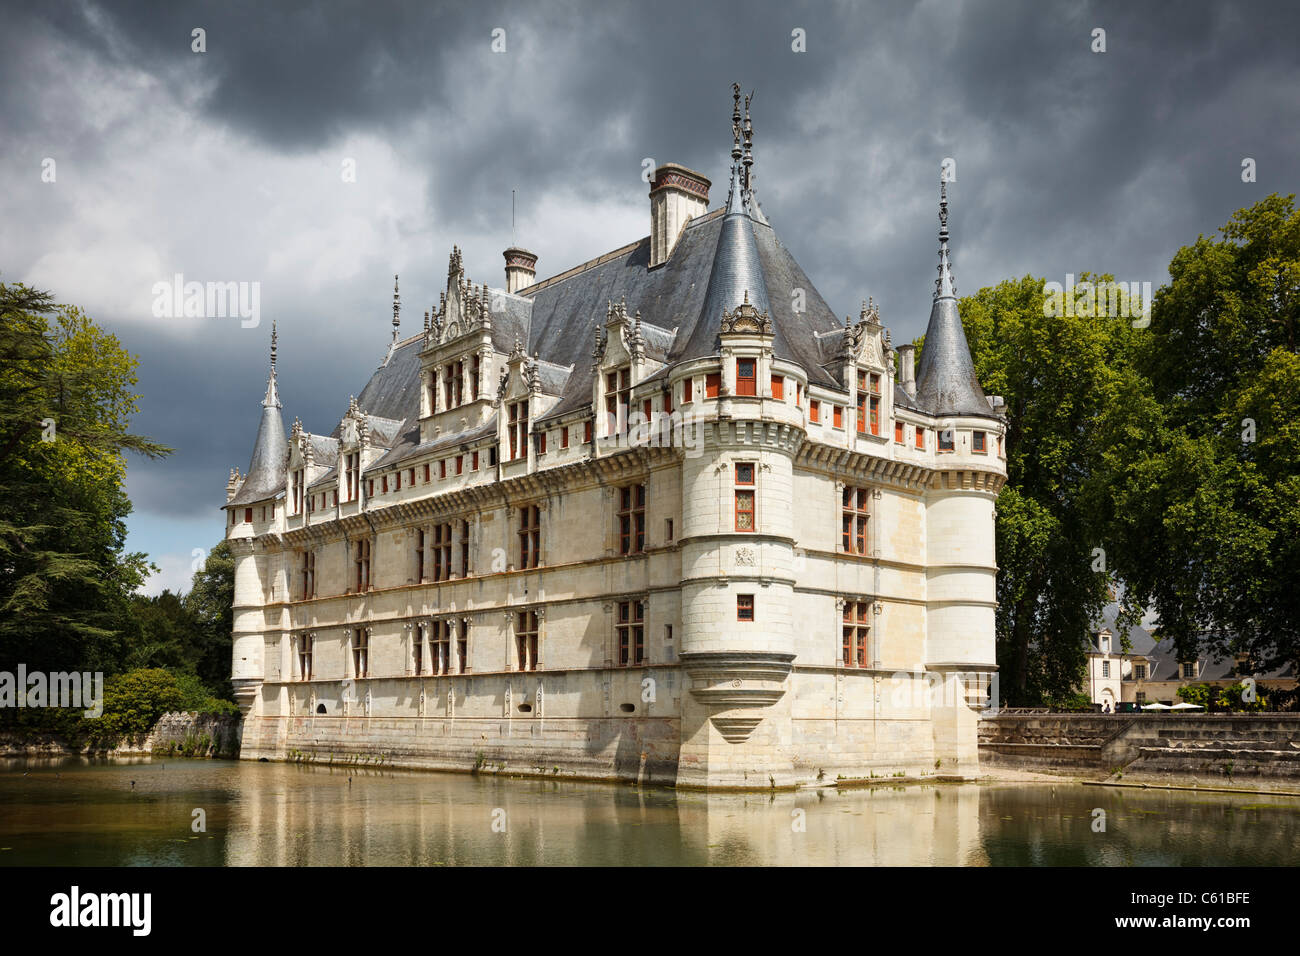 Chateau francés en Azay-le-Rideau, un típico castillo del Loira, Indre et Loire, Valle del Loira, Francia, Europa en verano Foto de stock